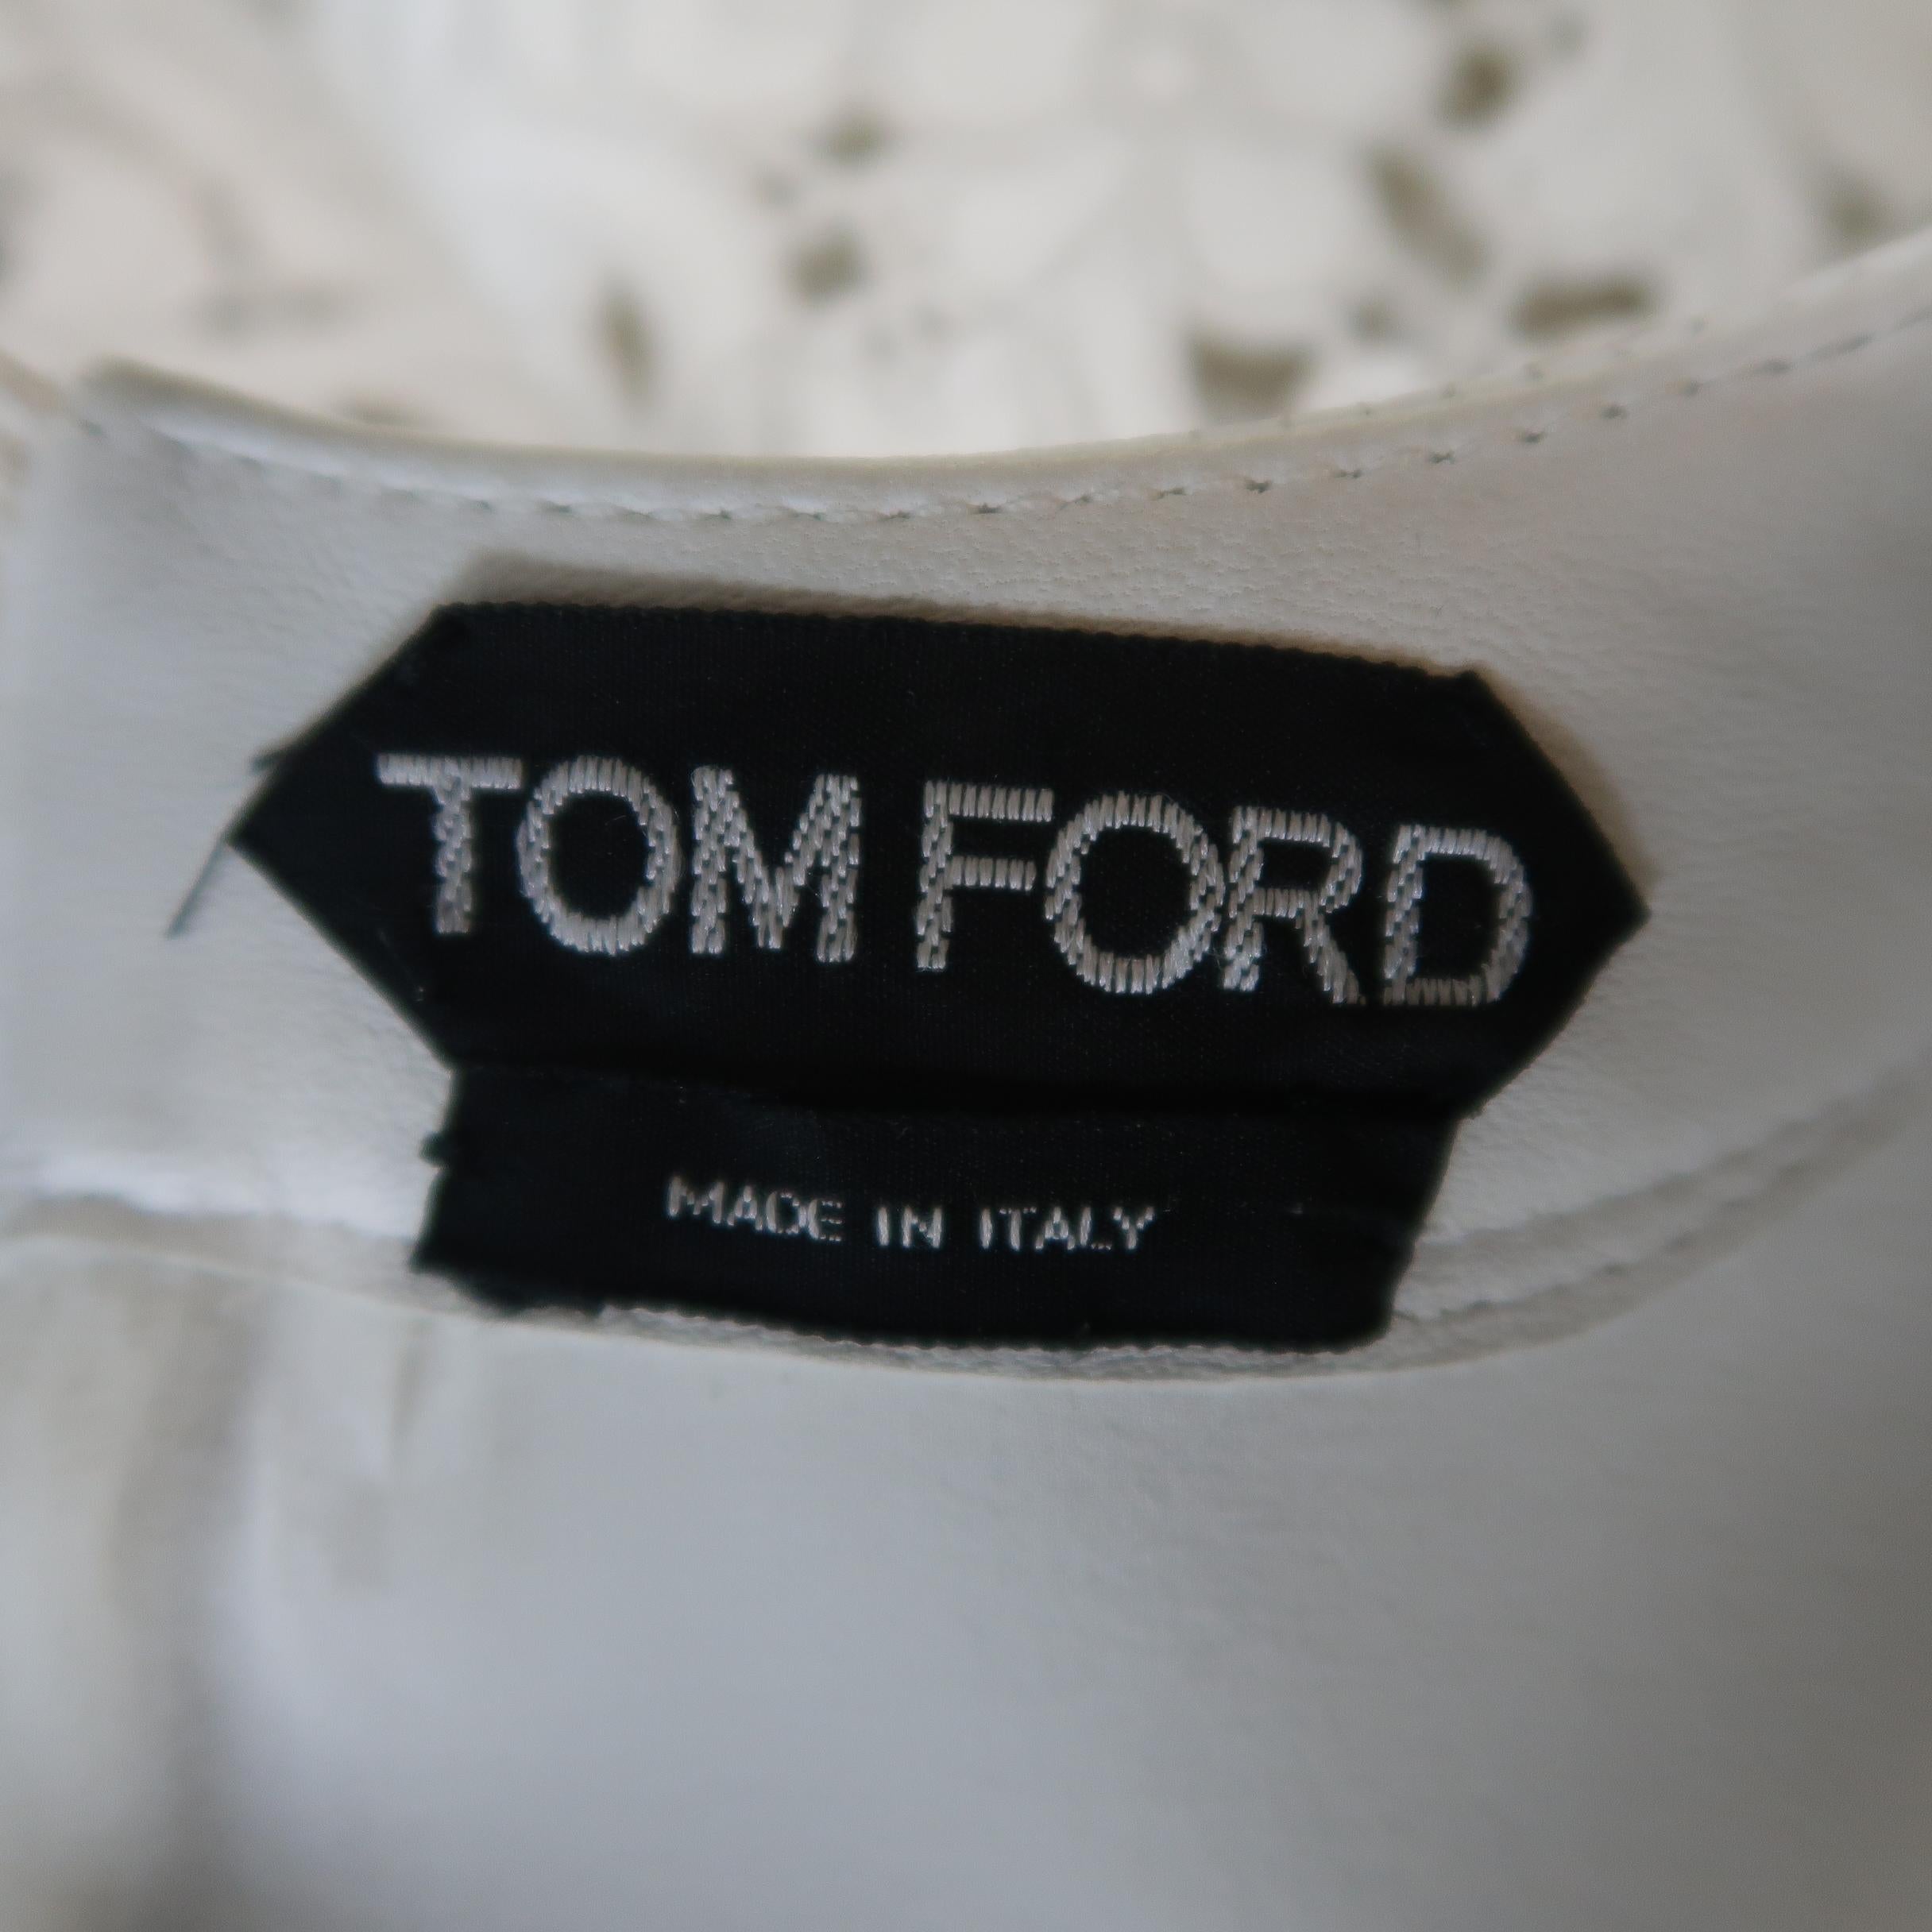 TOM FORD Dress - White Leather Lace Velvet Bow Shift Cocktail Dress 7